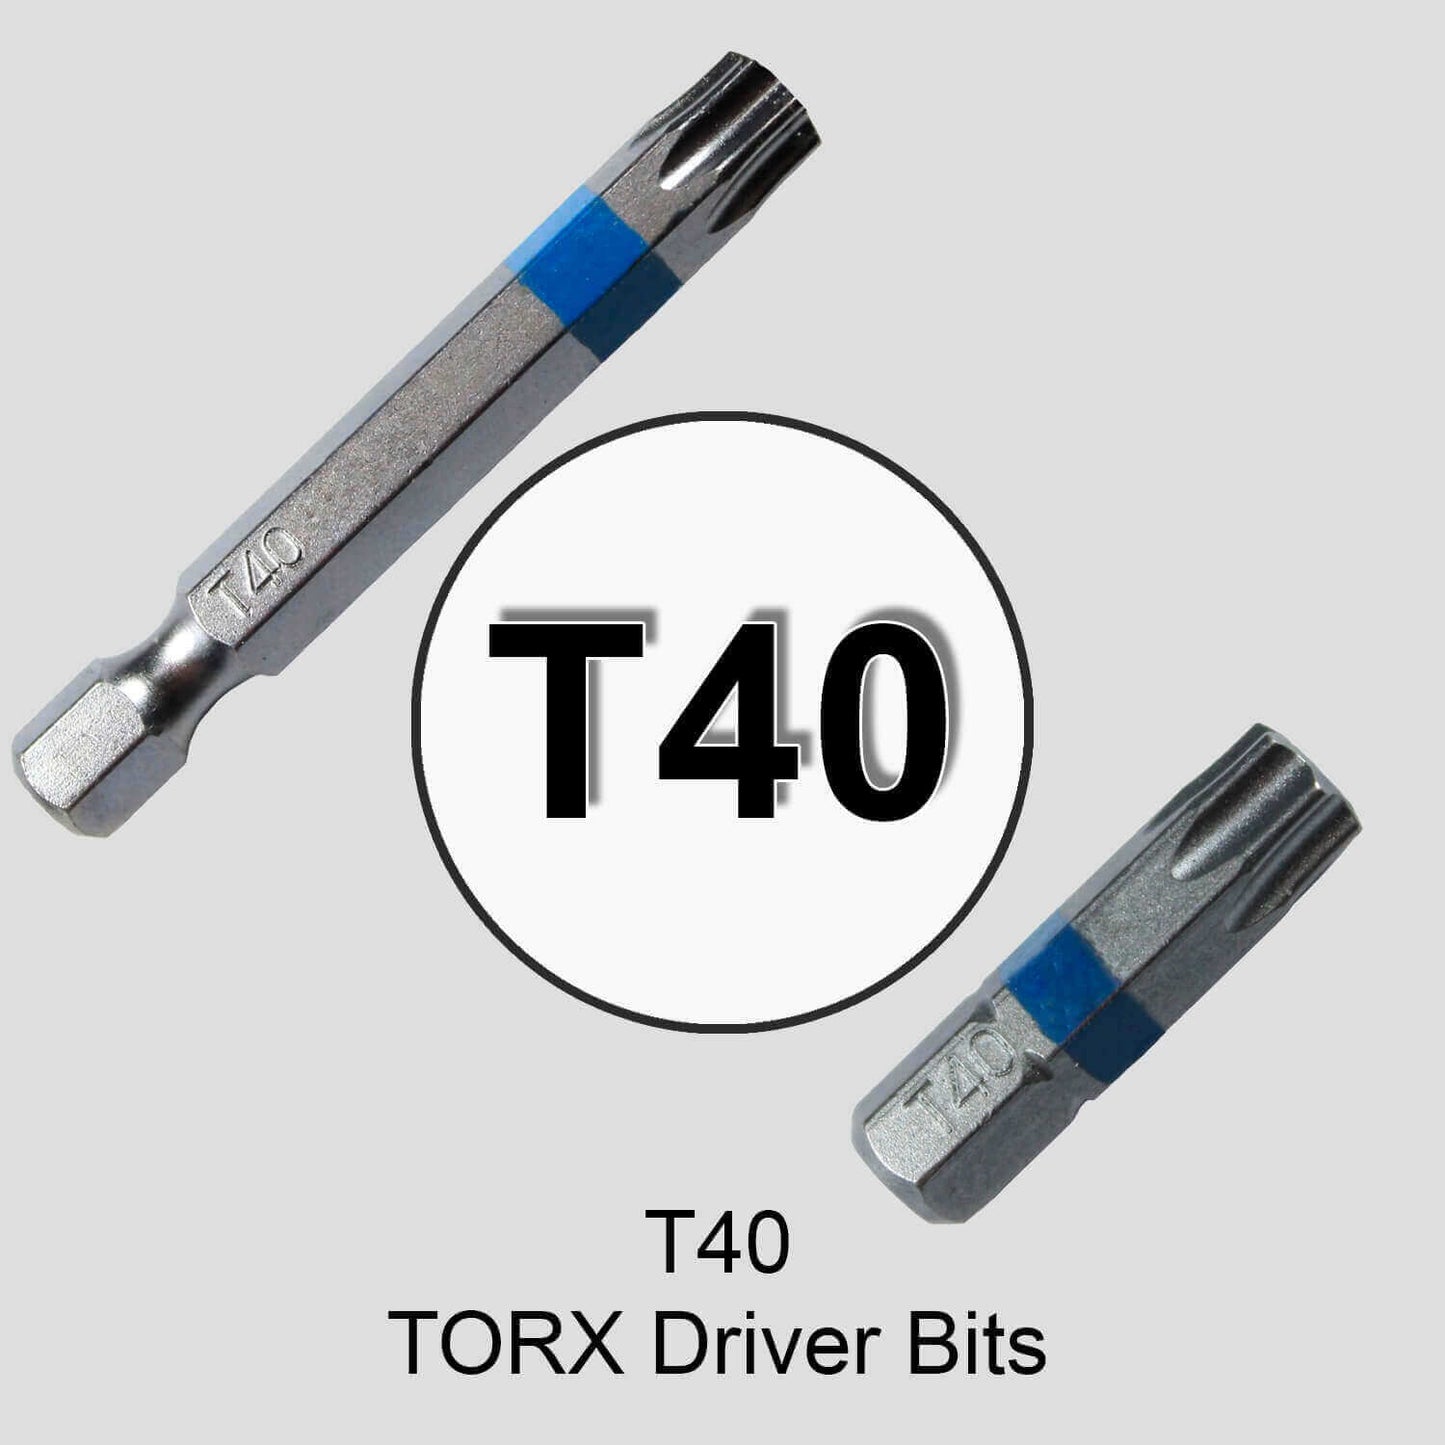 T40 (T-40) Torx/Star Driver Bit - Color Coded T40 Torx/Star Drive Bit for Screws and Fasteners Requiring T40 (T-40) Size Bits